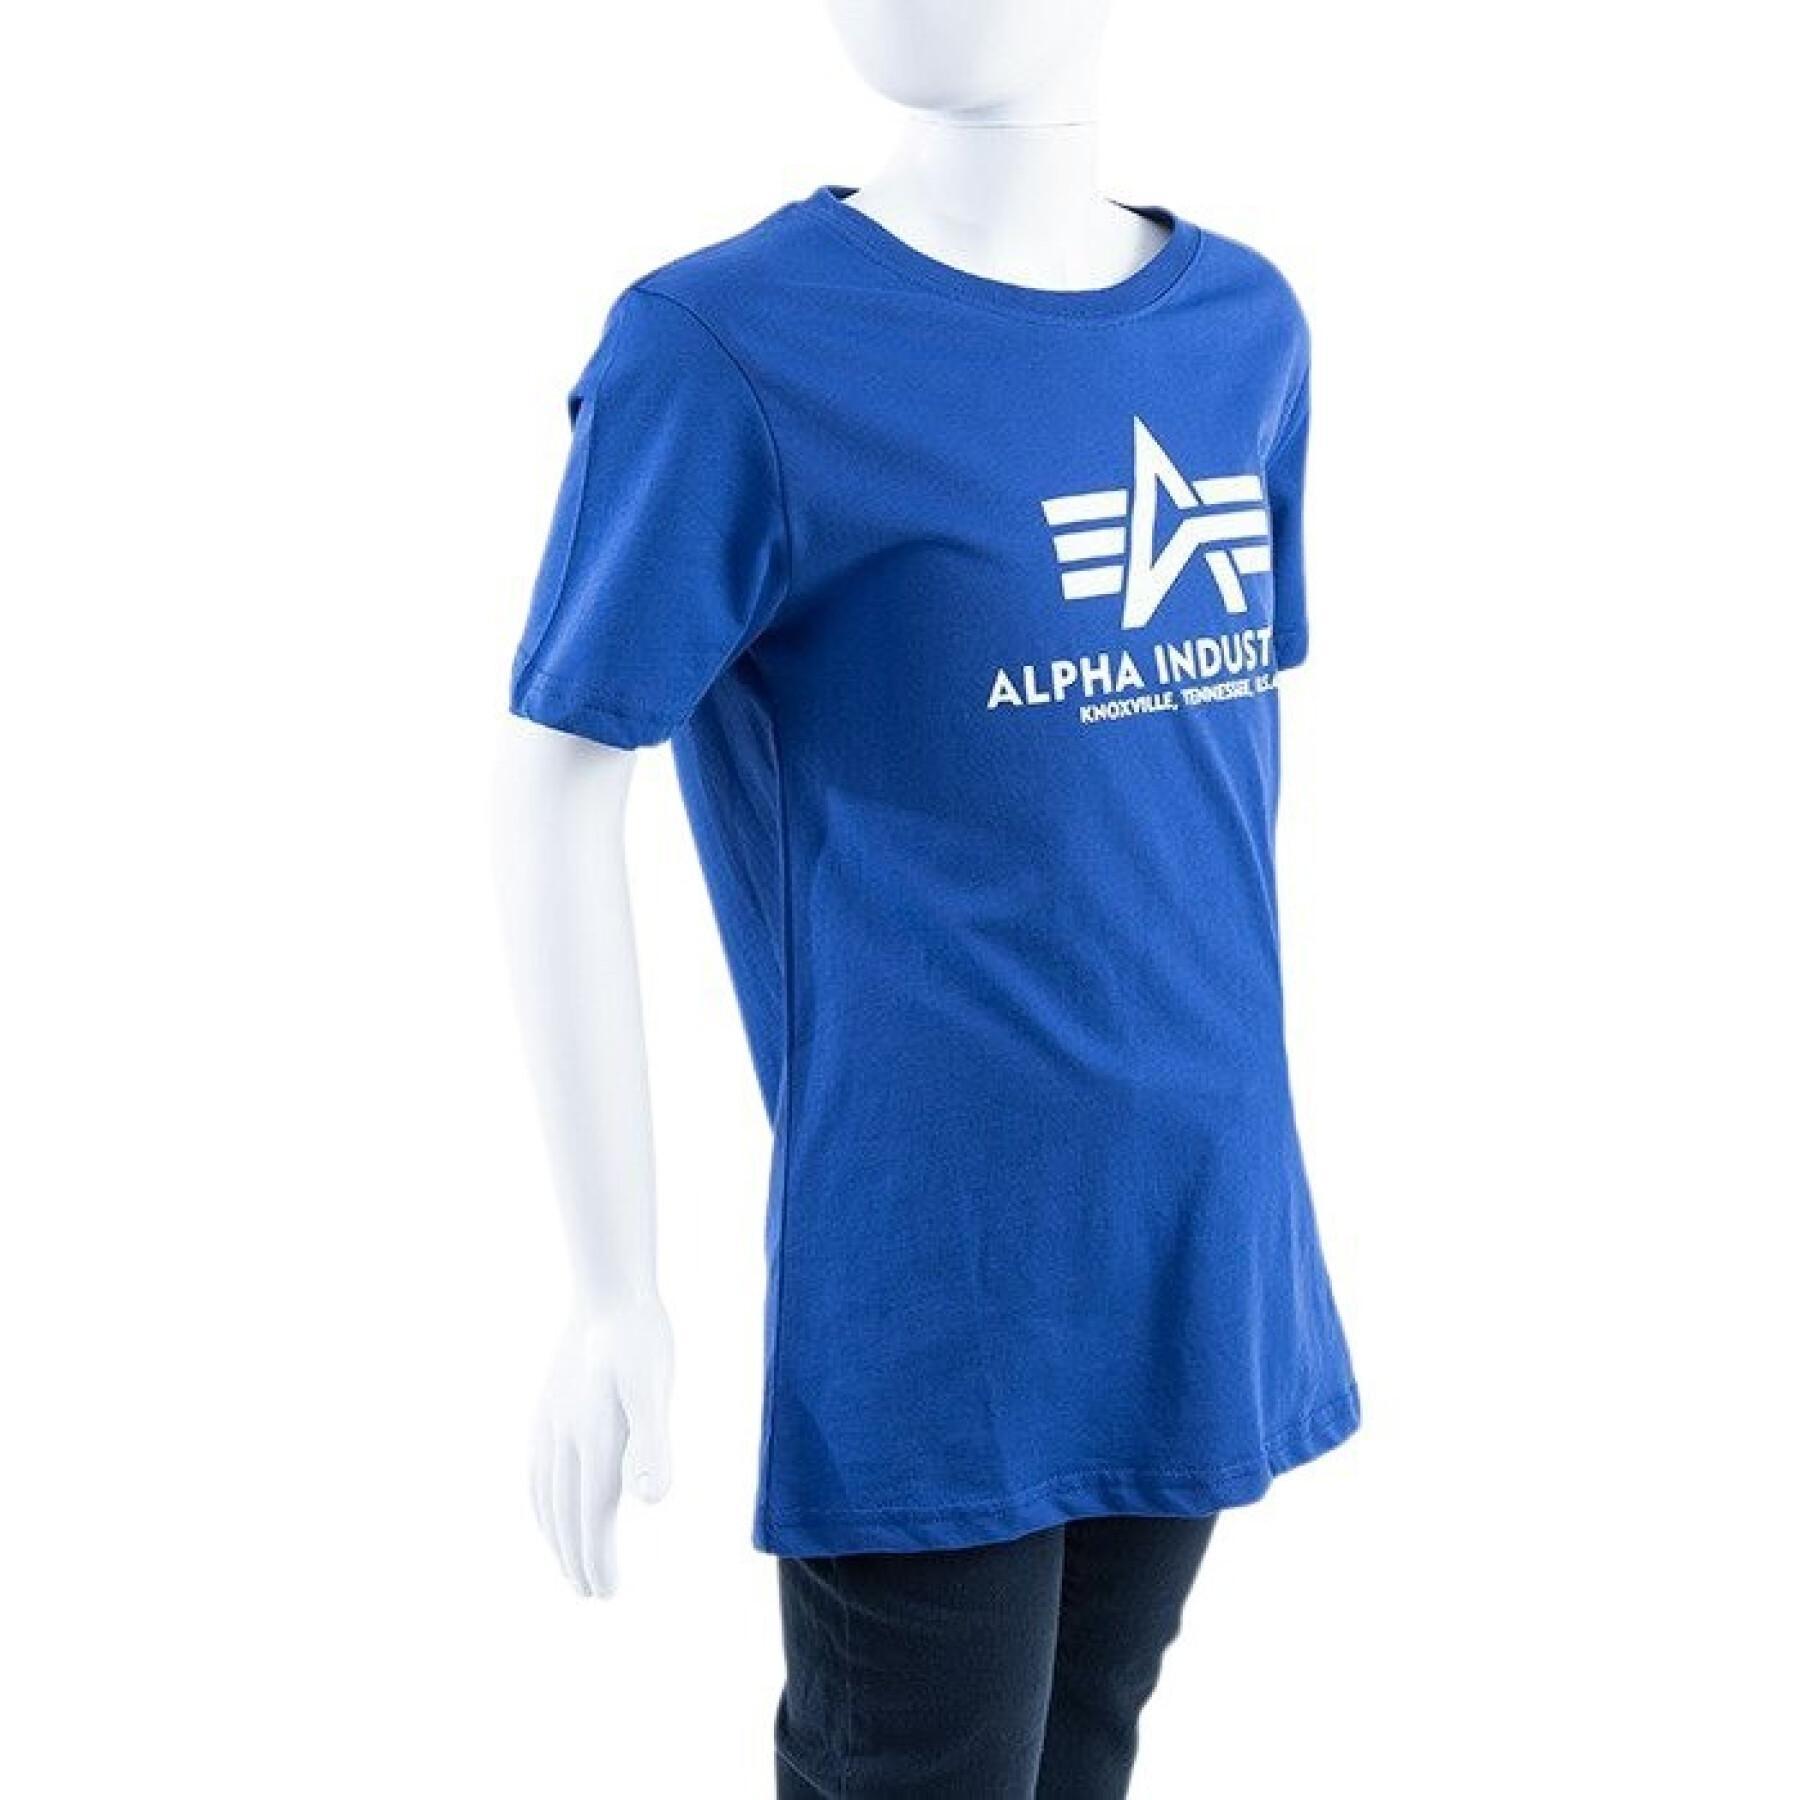 Kinder T-Shirt Alpha Industries Basic